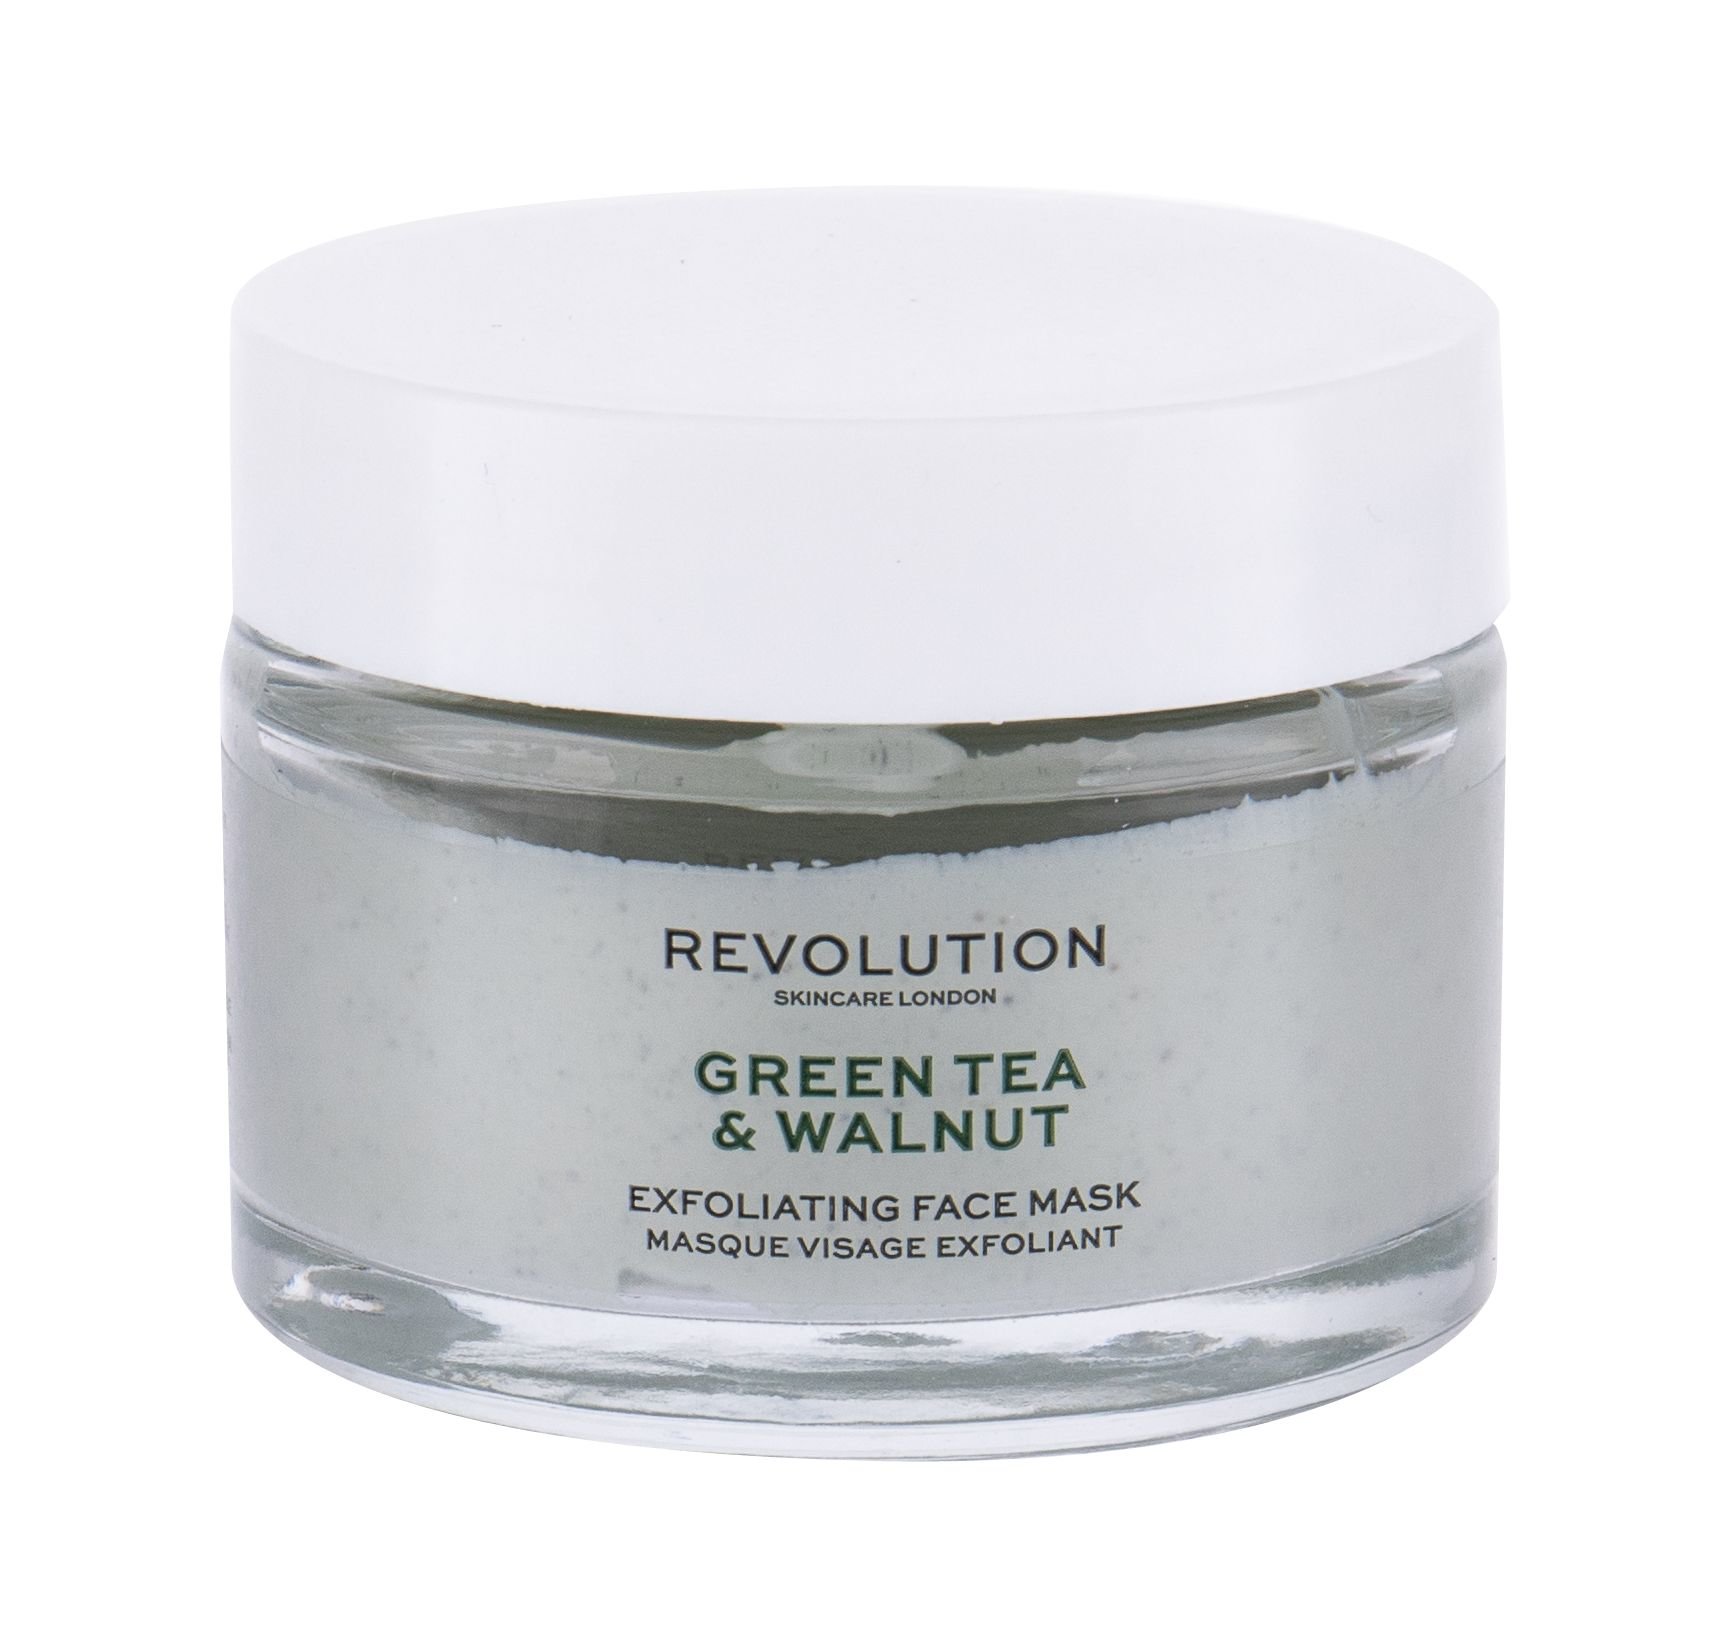 Makeup Revolution London Skincare Green Tea & Walnut Veido kaukė